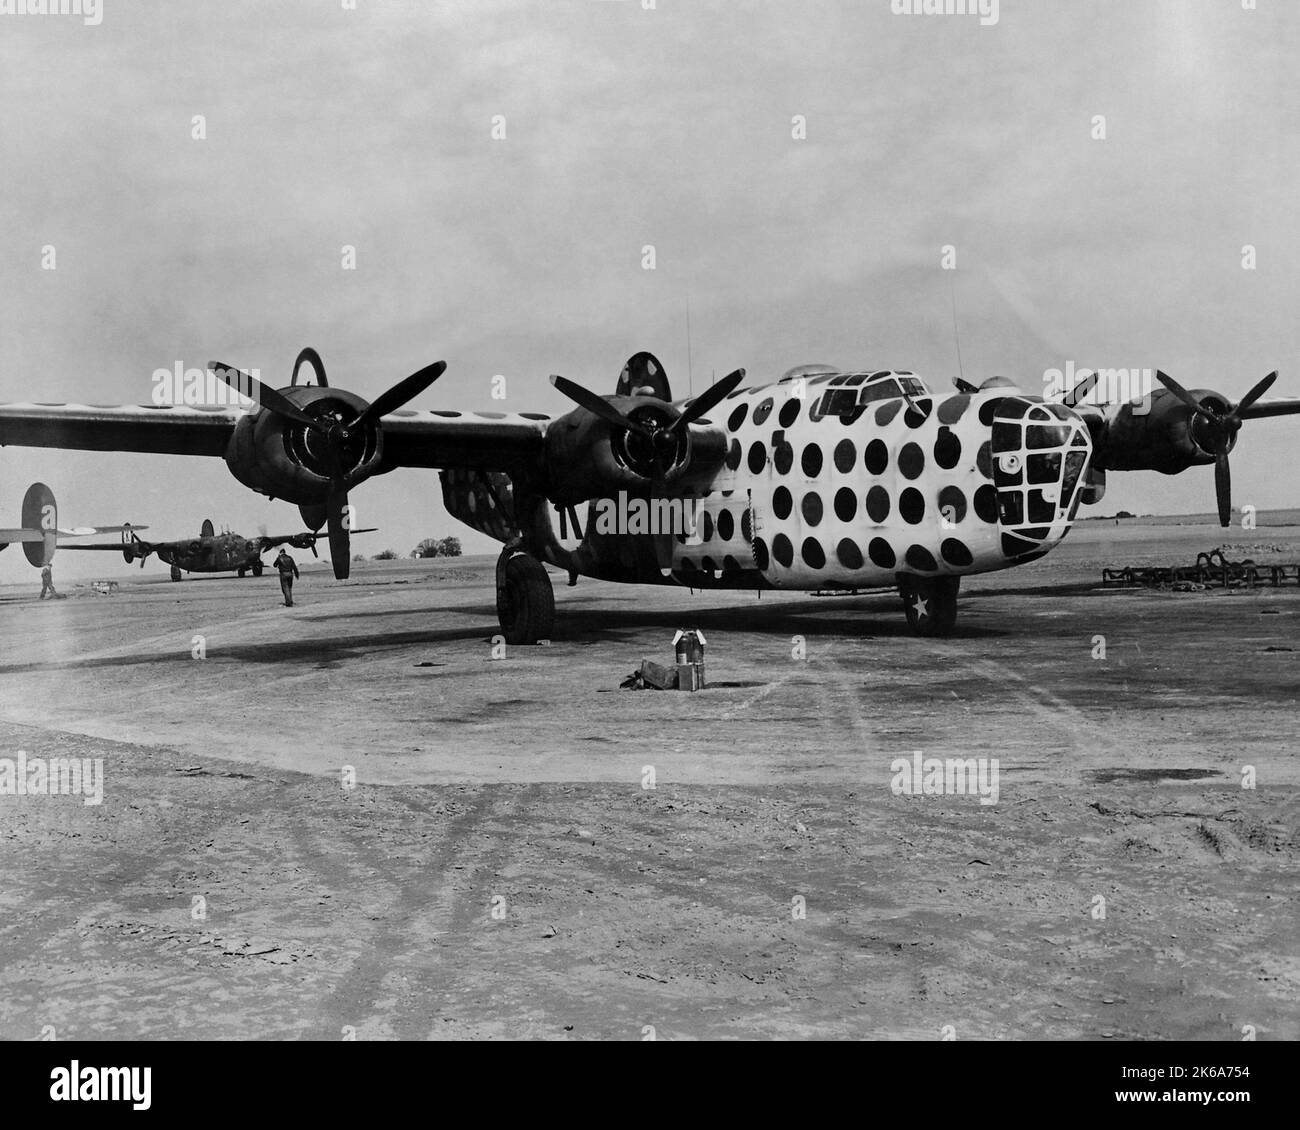 El B-24 Liberator, un bombardero pesado estadounidense. Foto de stock